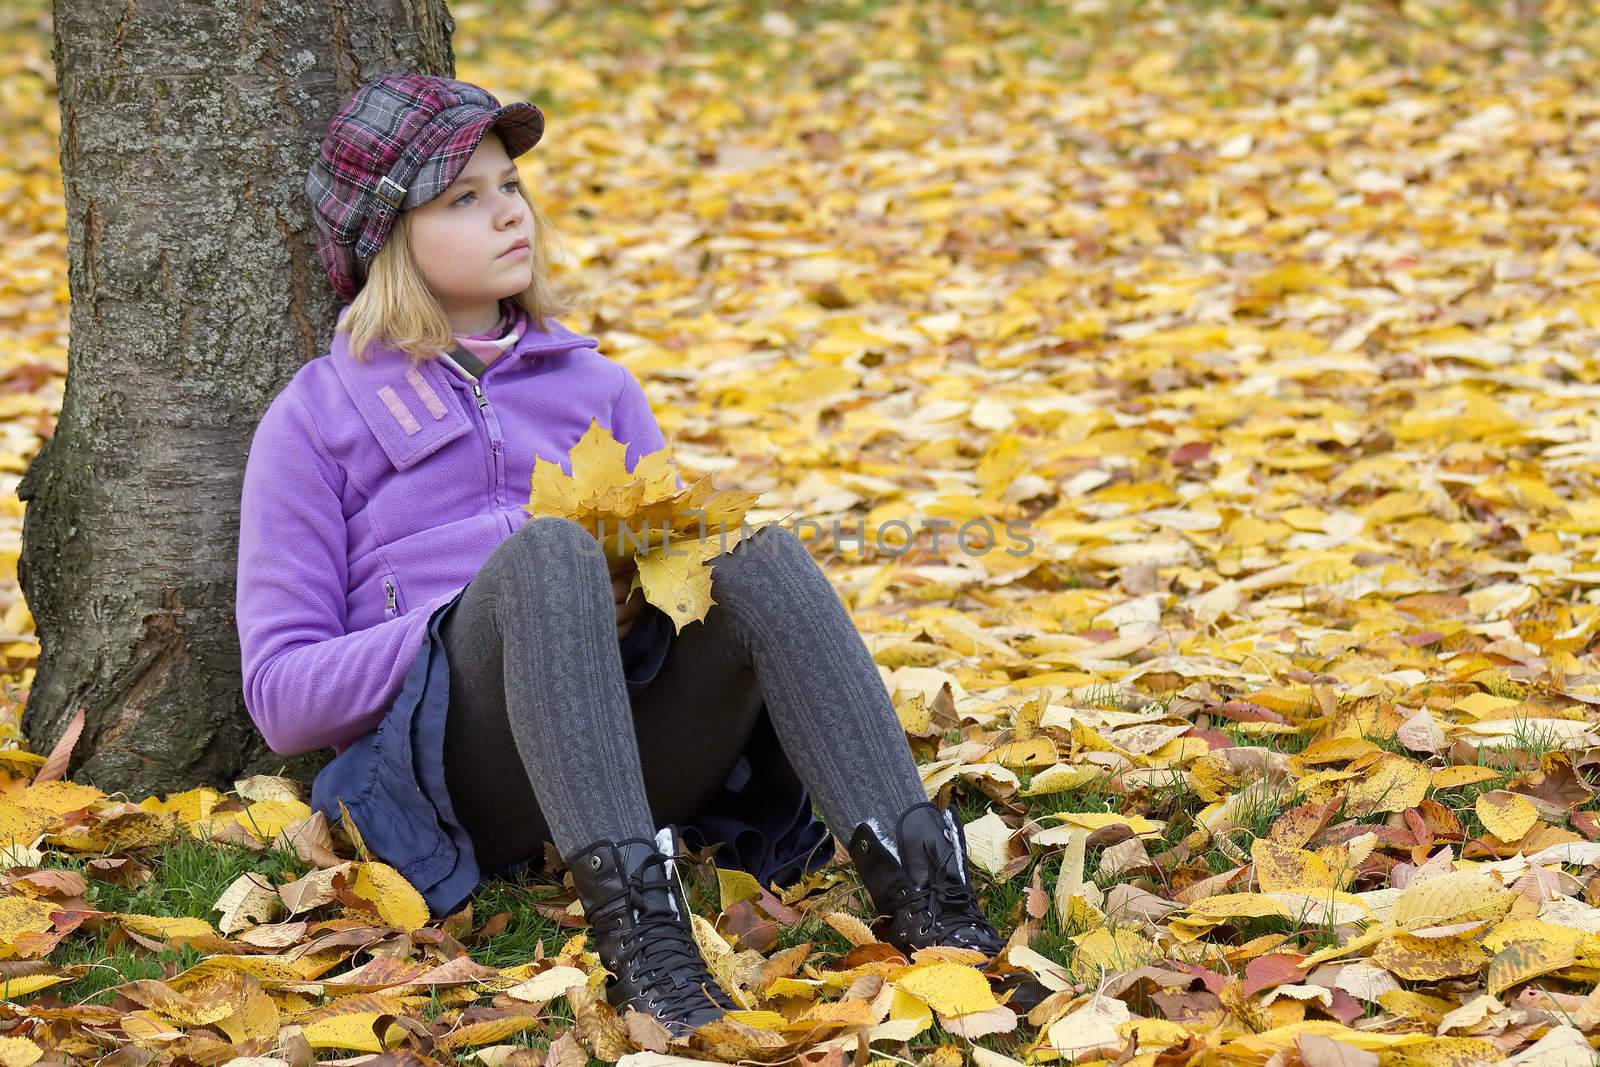 Full length portrait of a little girl sitting under tree in autumn park